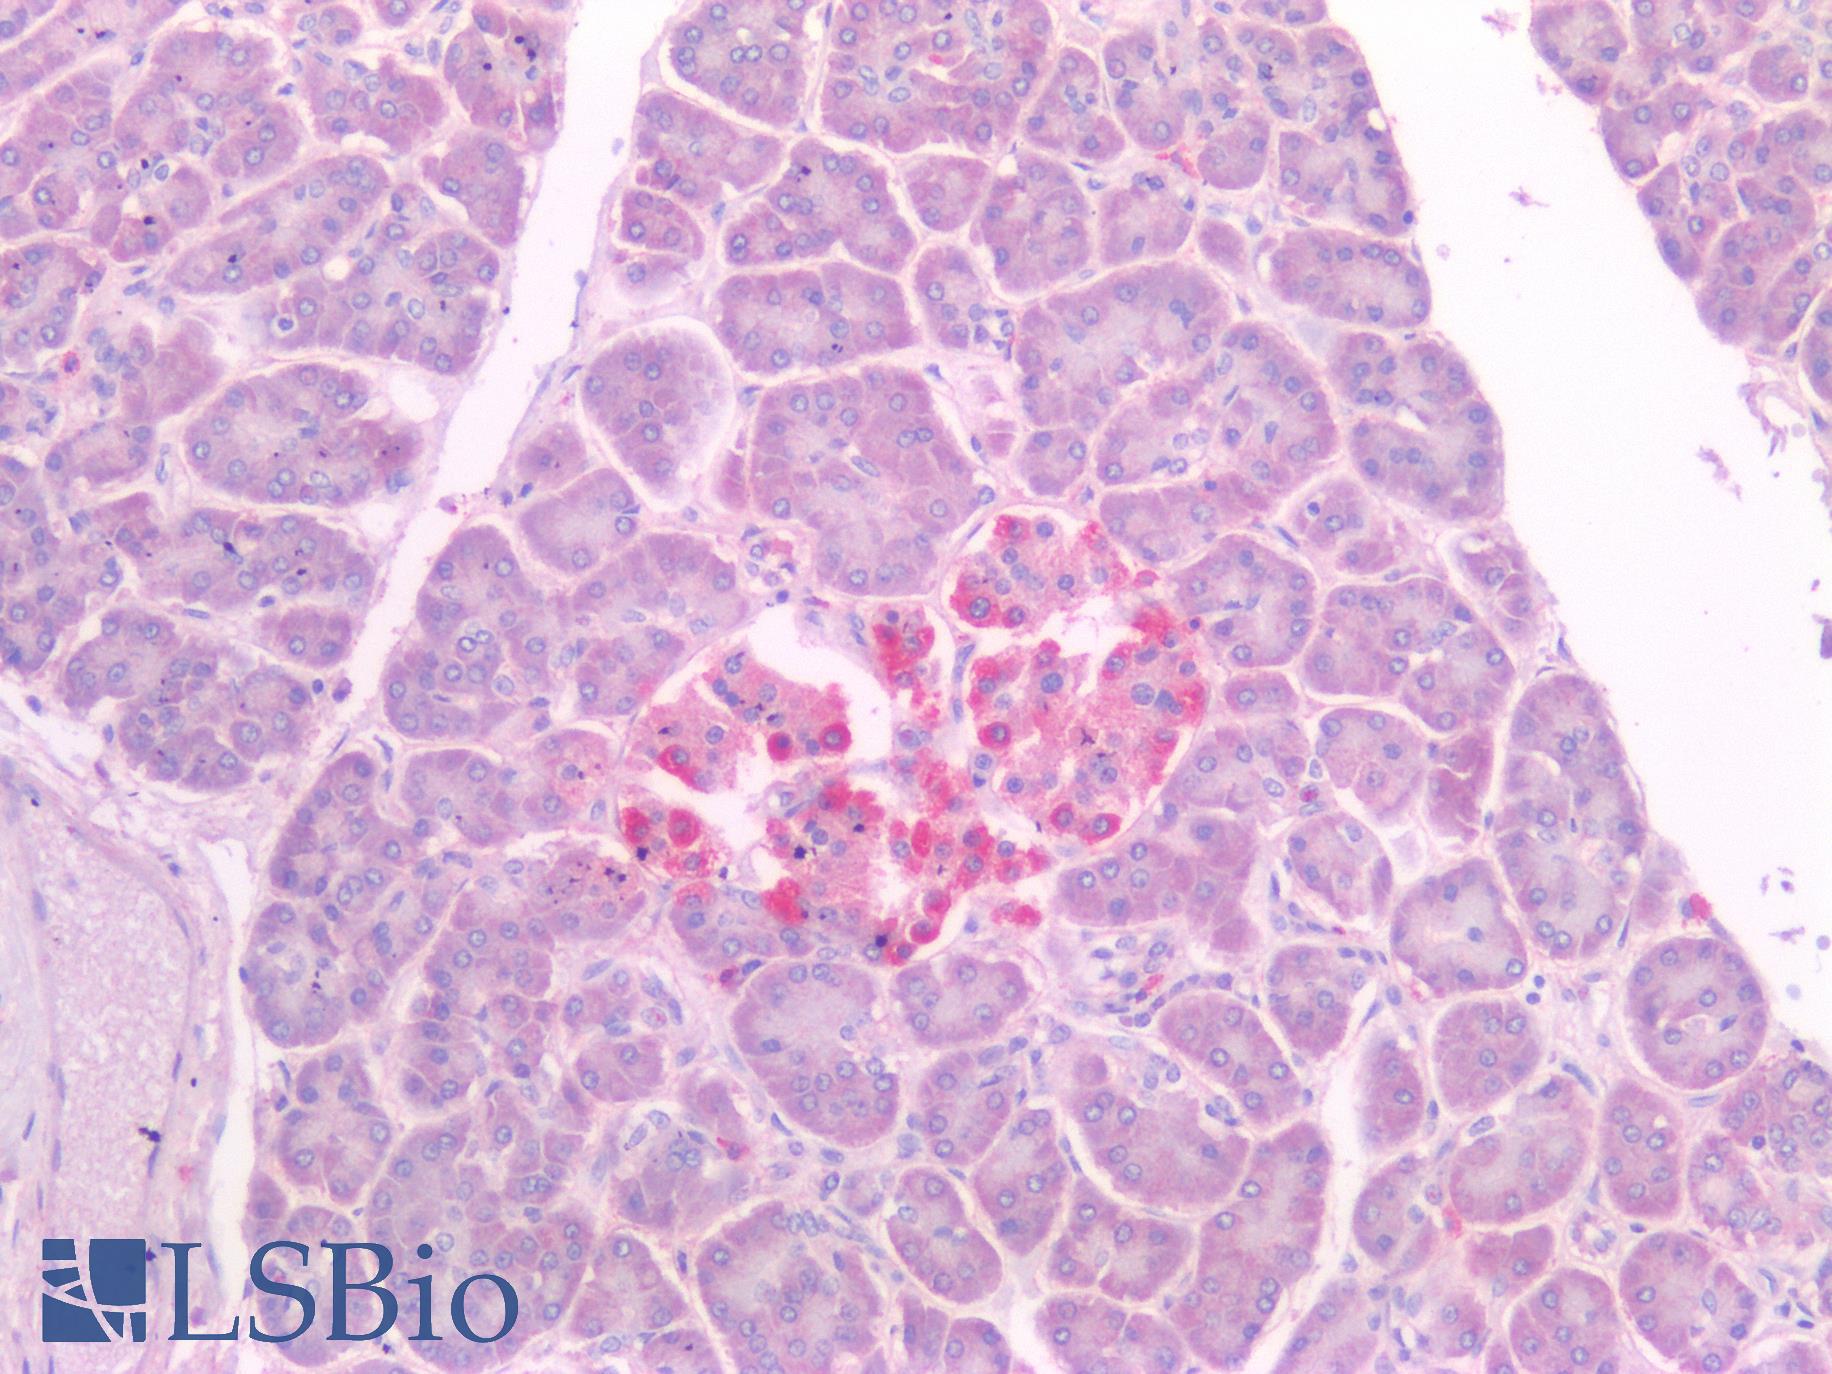 NKX6-1 Antibody - Human Pancreas, Islets of Langerhans: Formalin-Fixed, Paraffin-Embedded (FFPE)